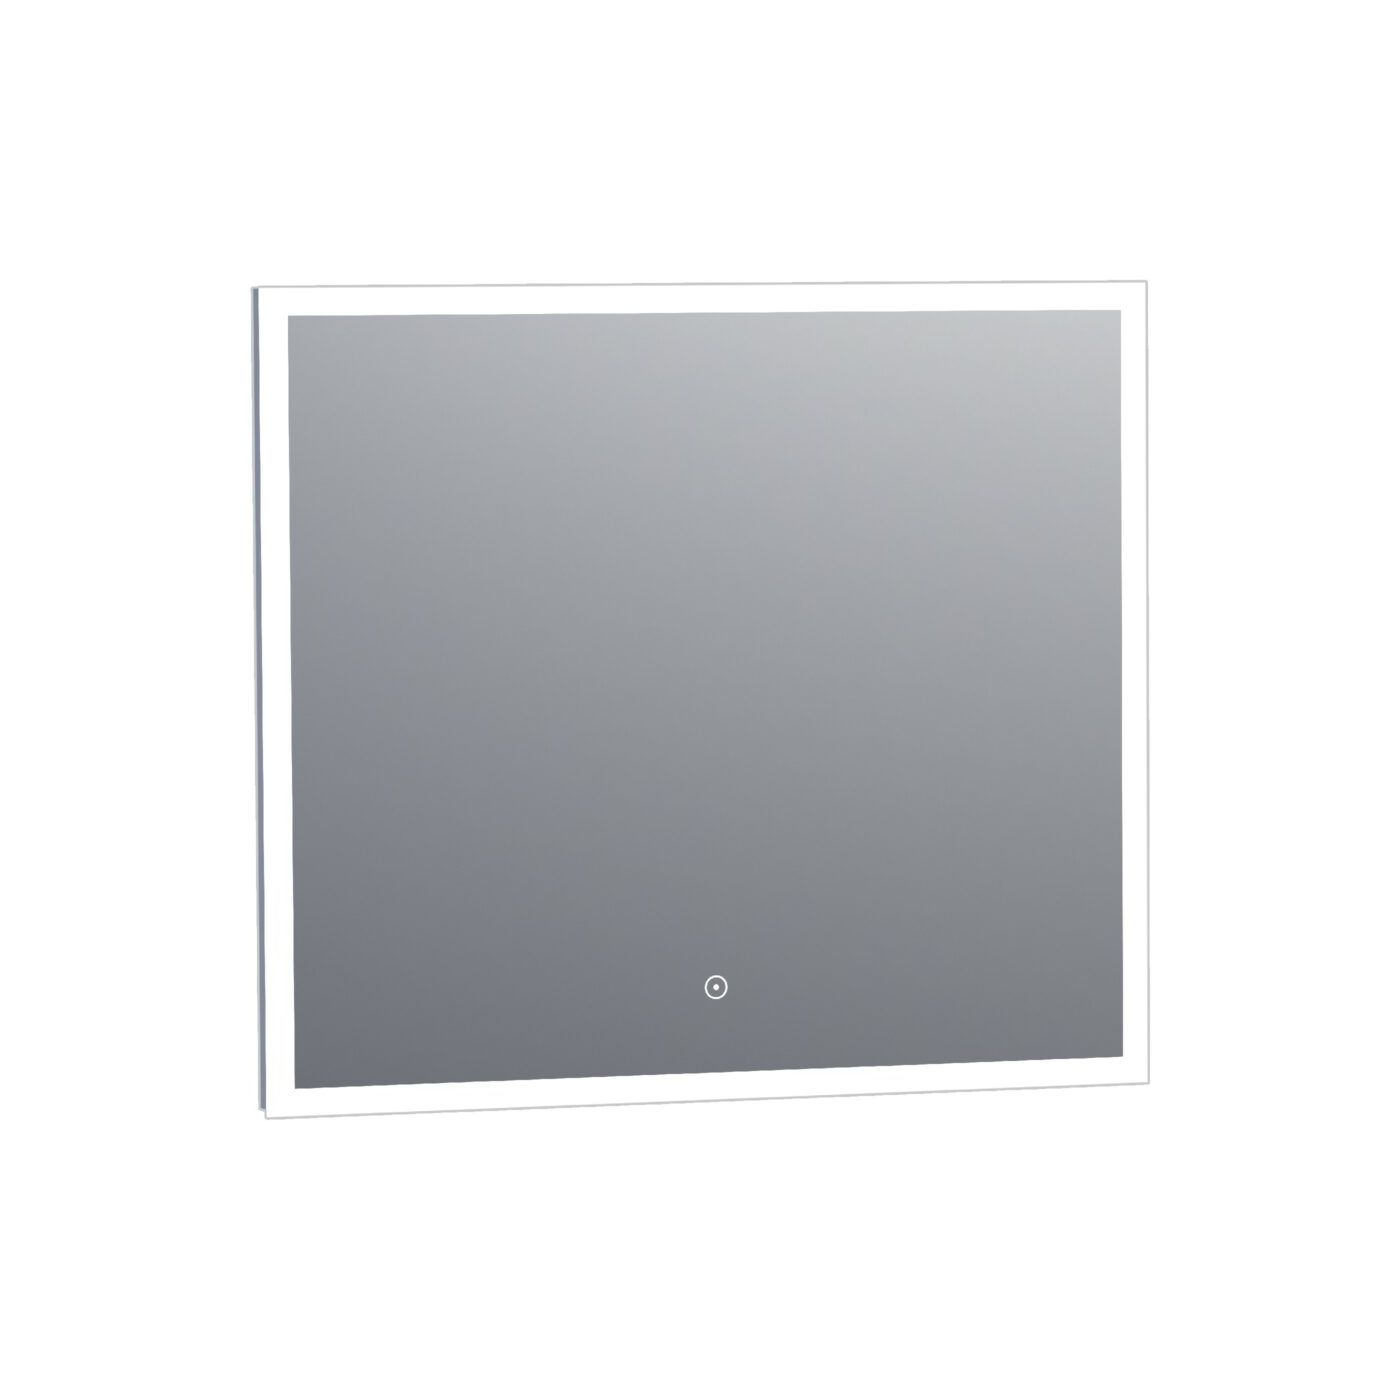 Tapo Edge spiegel 80x70 mat chroom